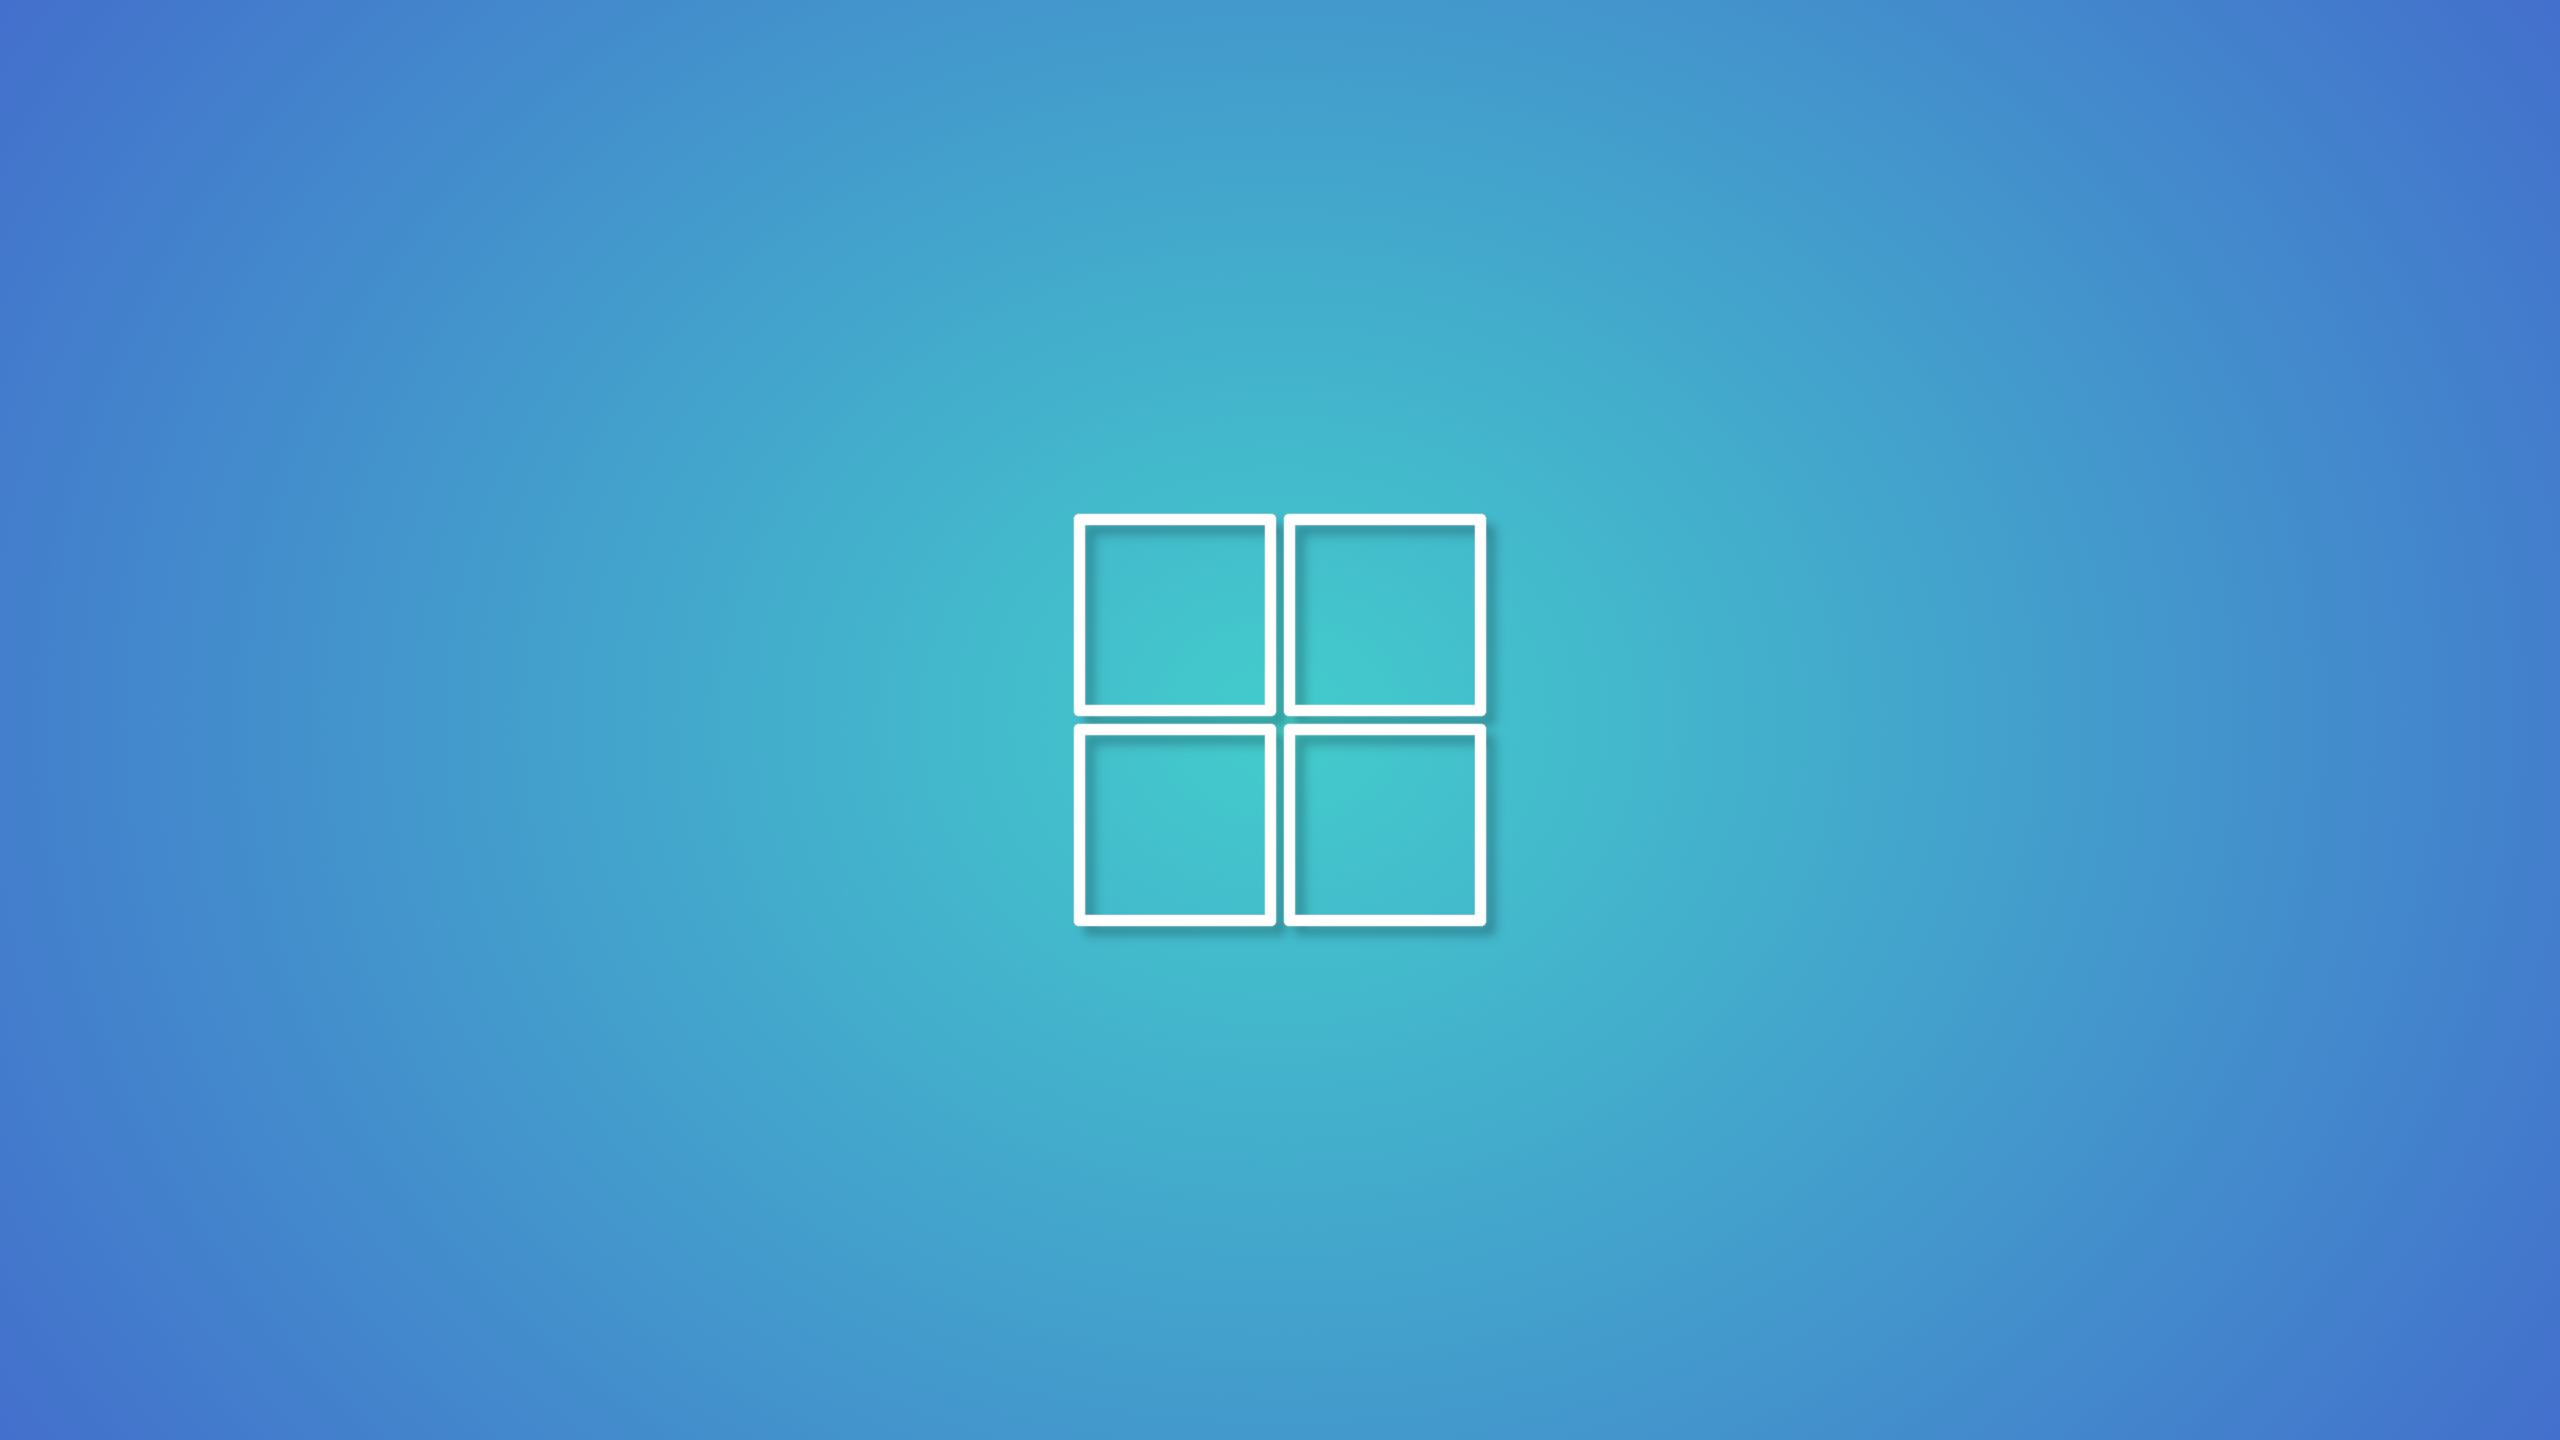 OC] Windows 10 Minimal Wallpapers